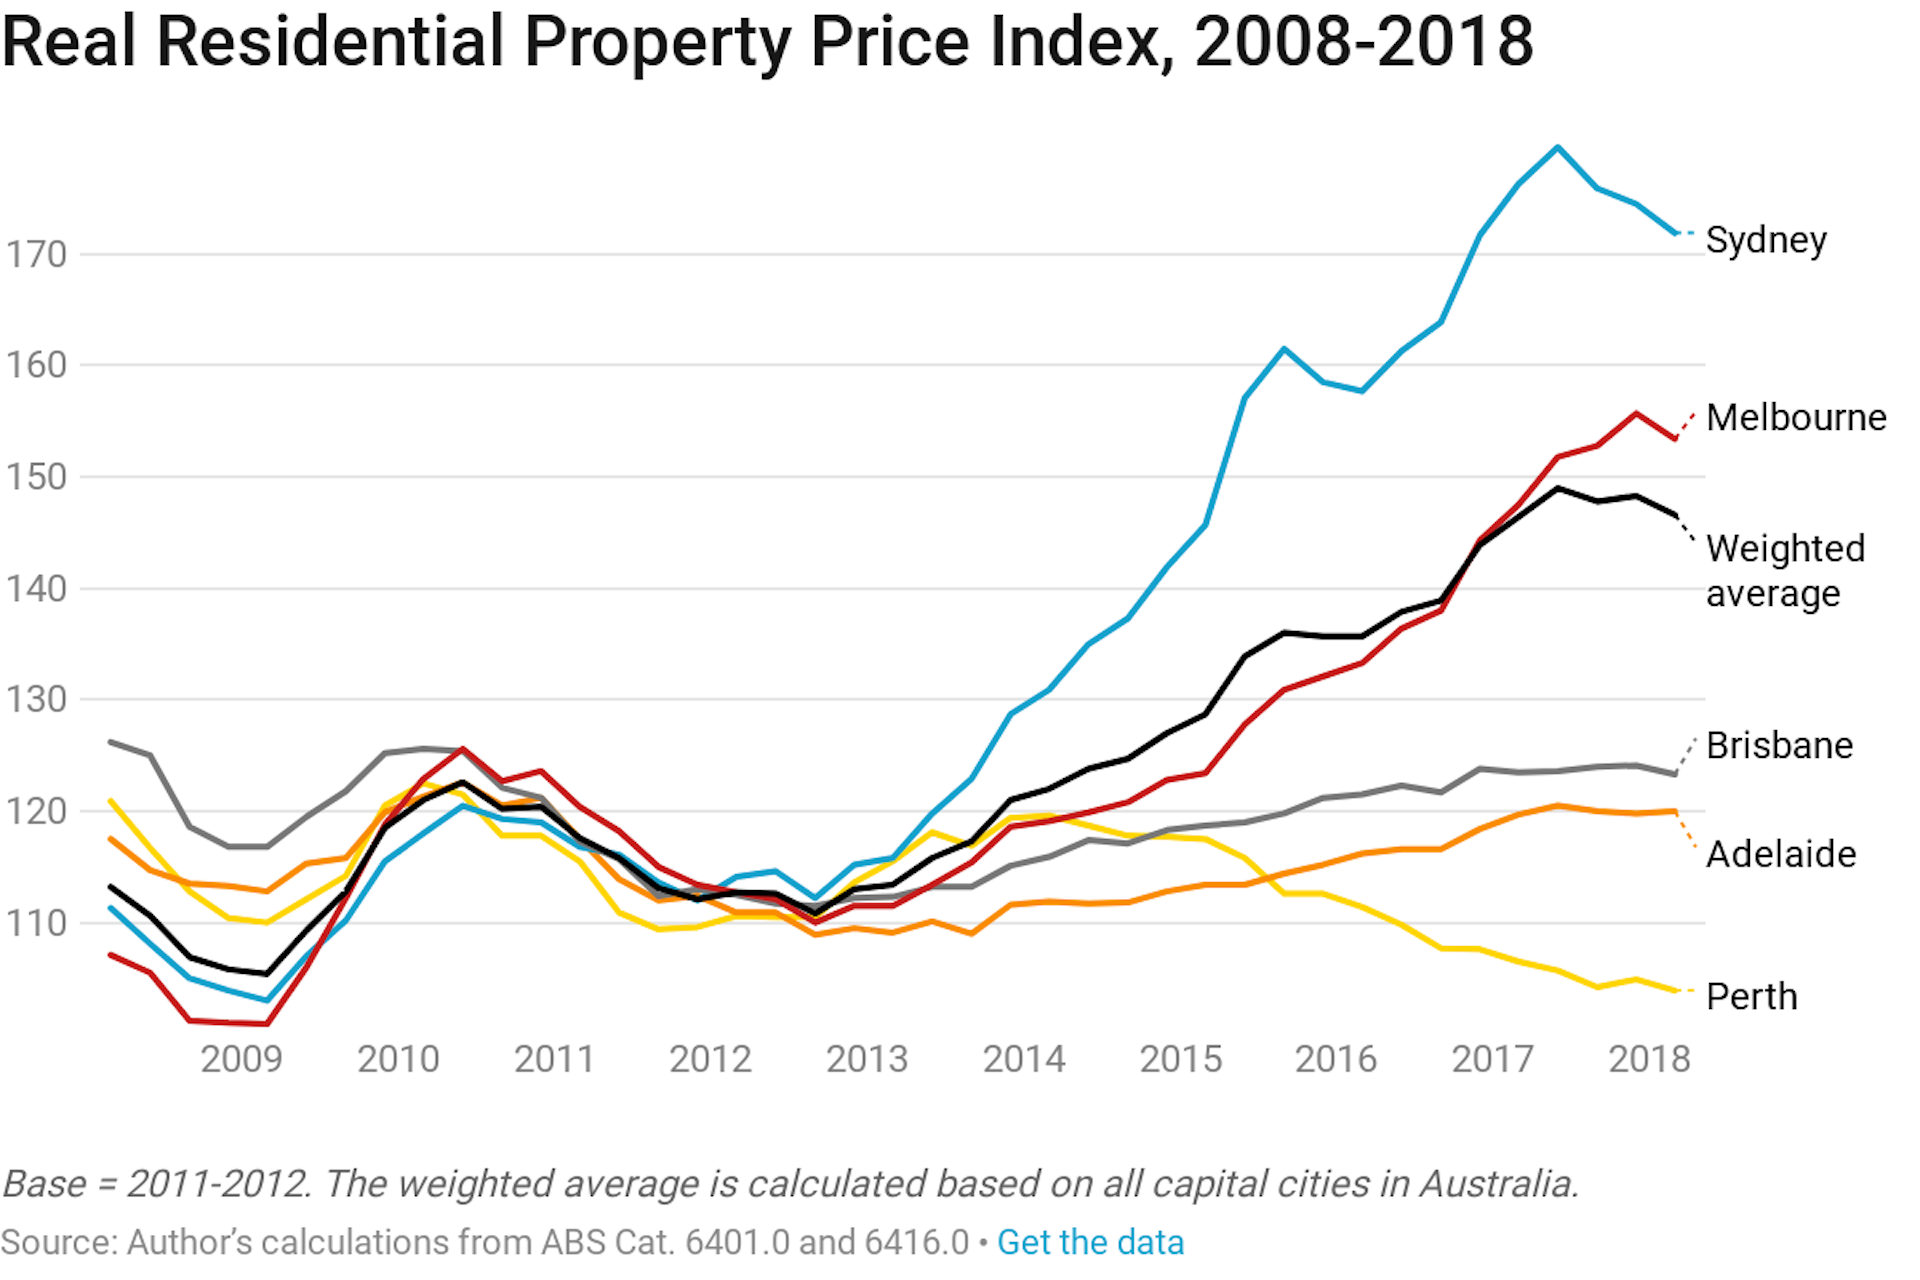 Brisbane House Price Chart